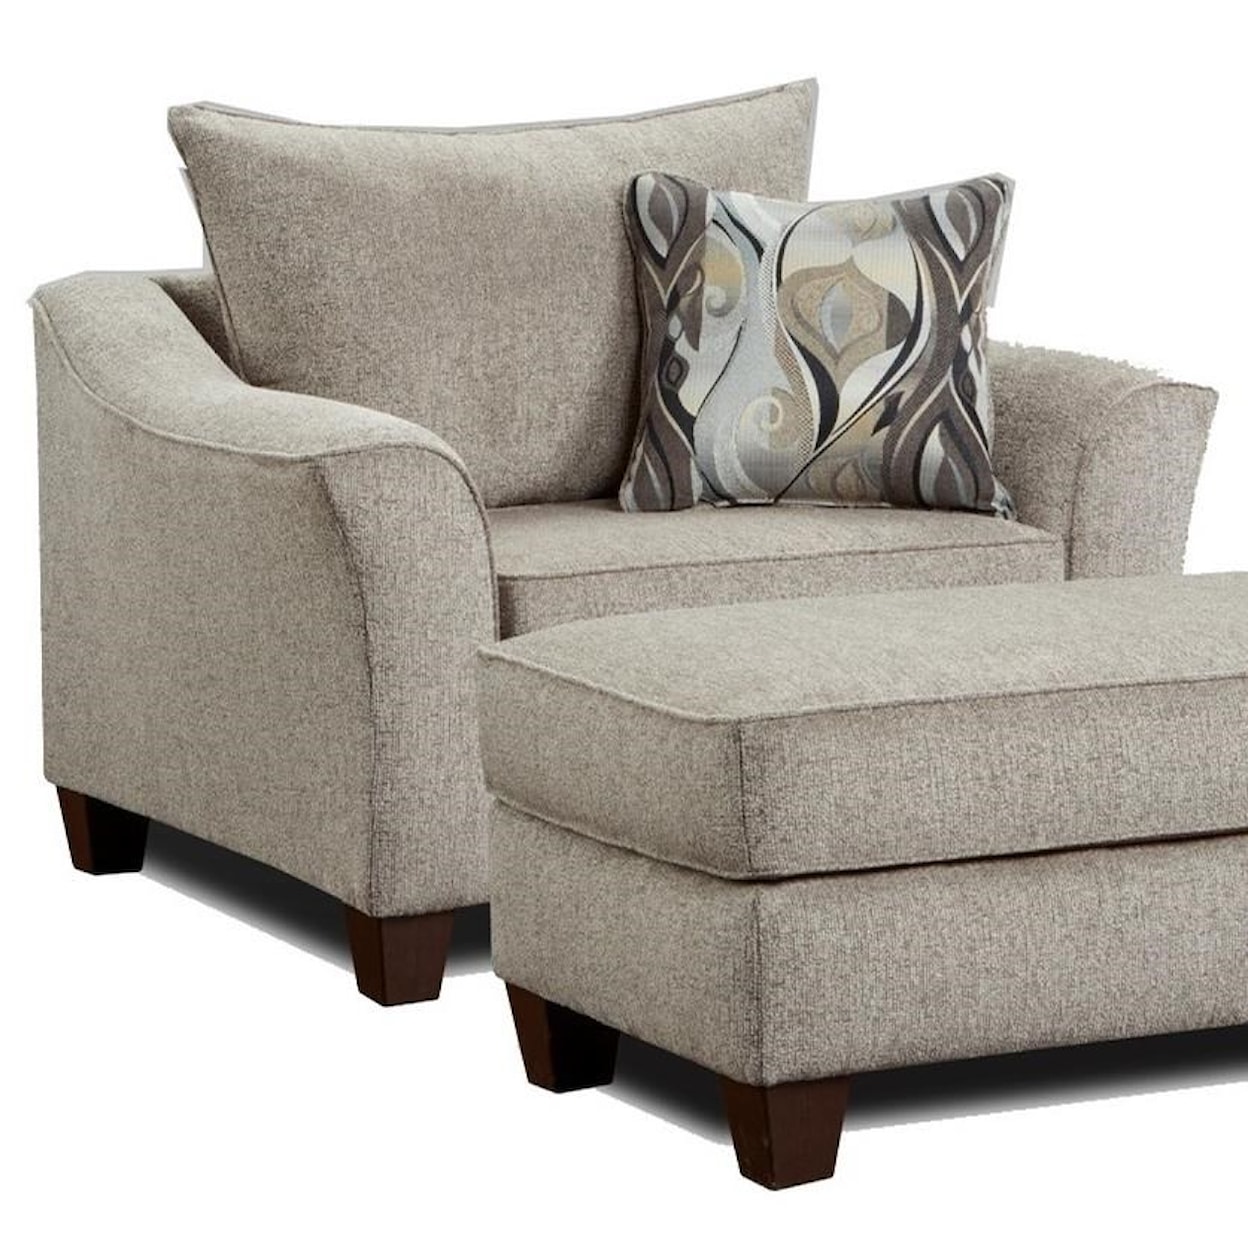 Affordable Furniture 7700 PLATINUM CHAIR |